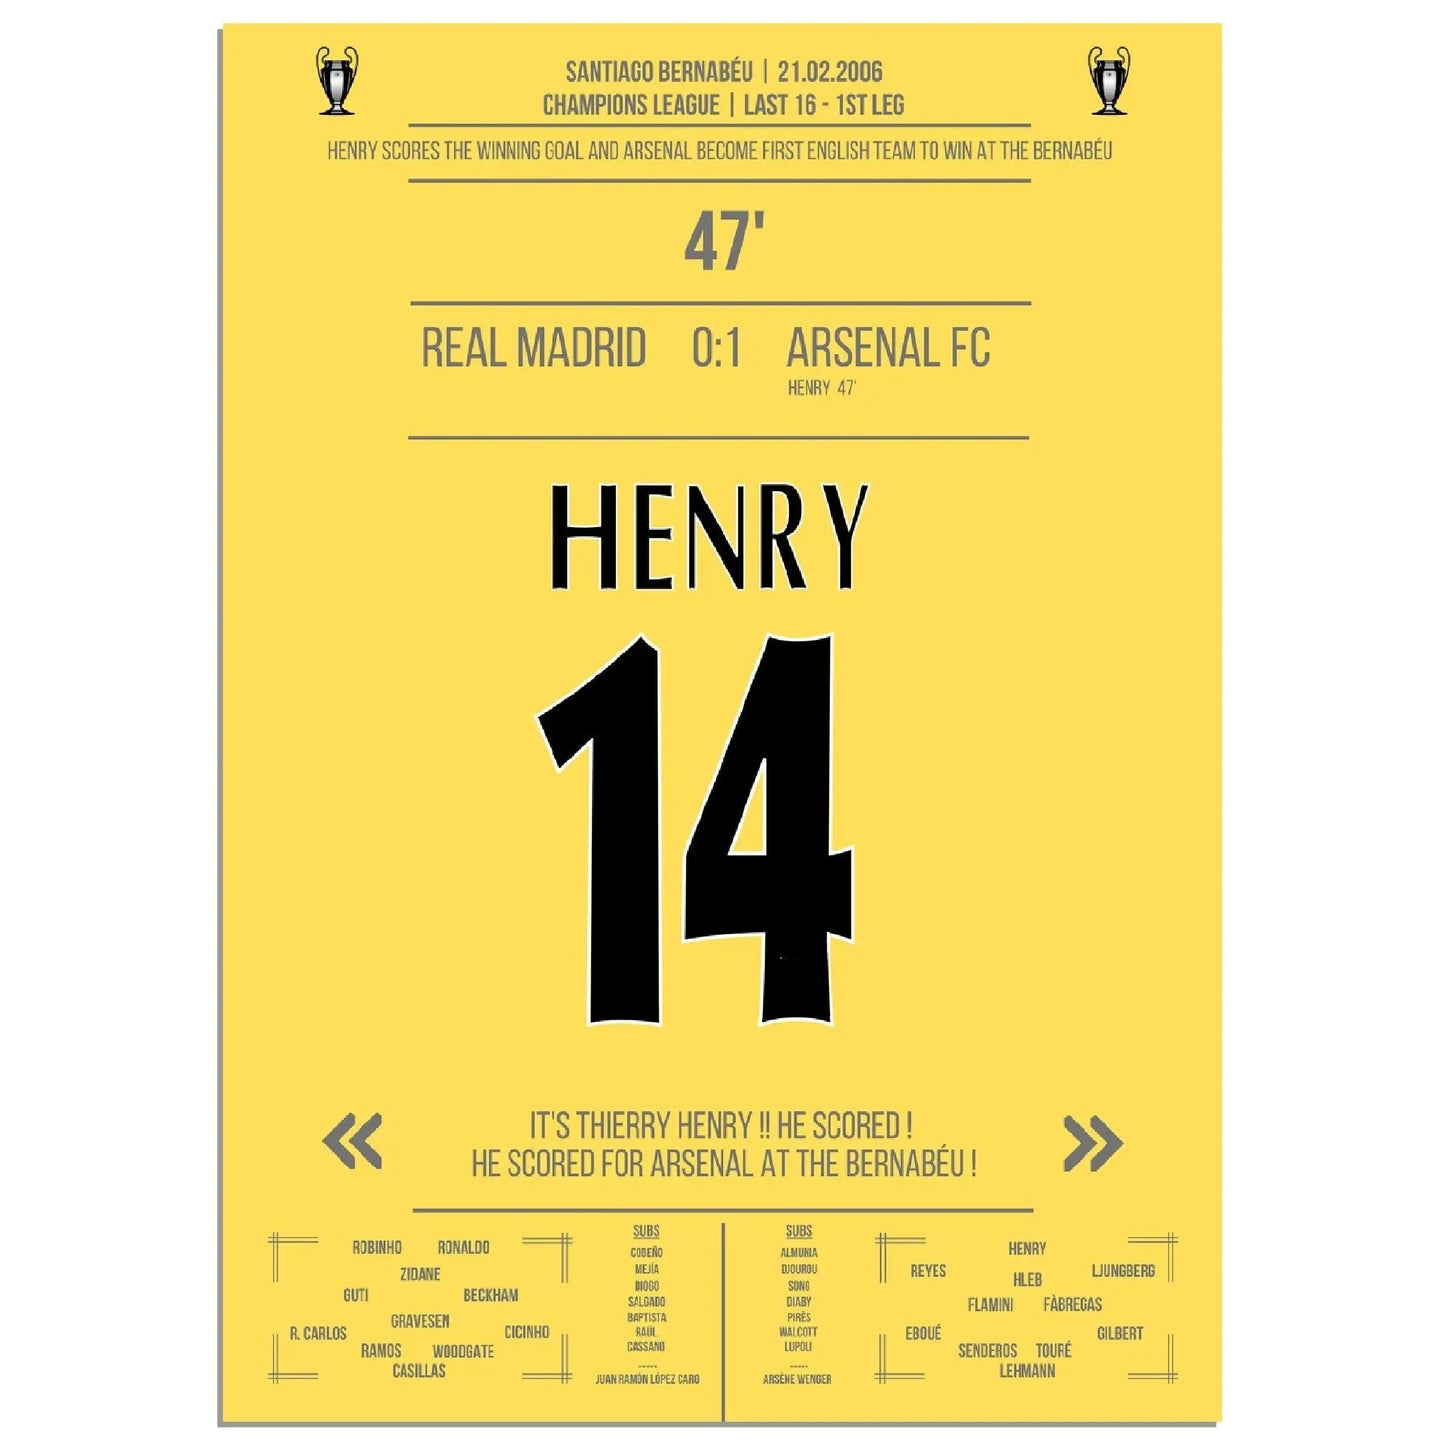 Legendäres Solo-Tor von Thierry Henry im Bernabeu Champions League 2006 